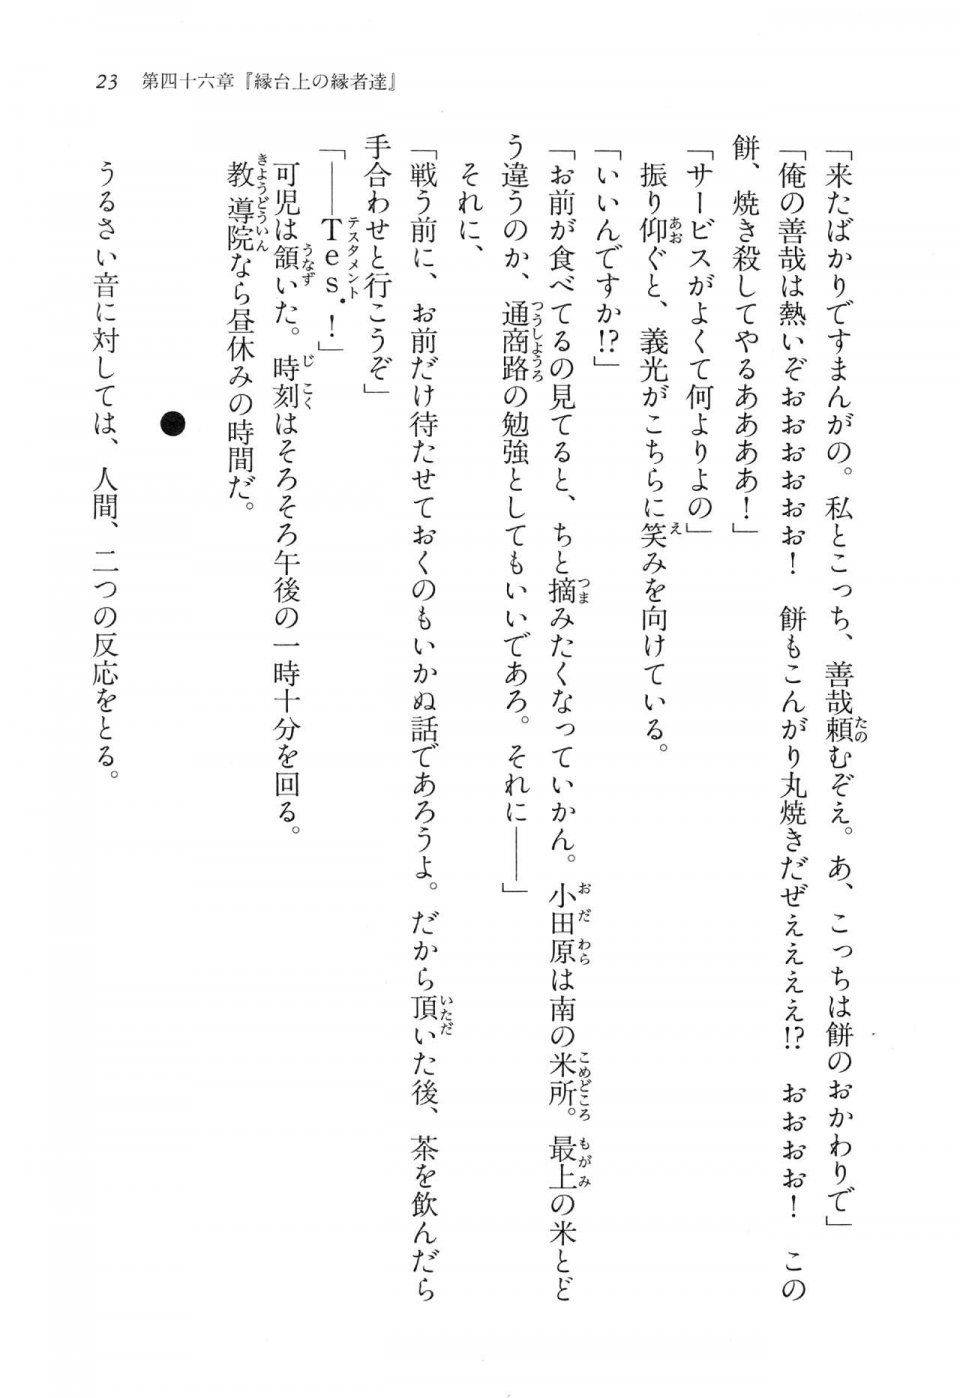 Kyoukai Senjou no Horizon LN Vol 15(6C) Part 1 - Photo #23